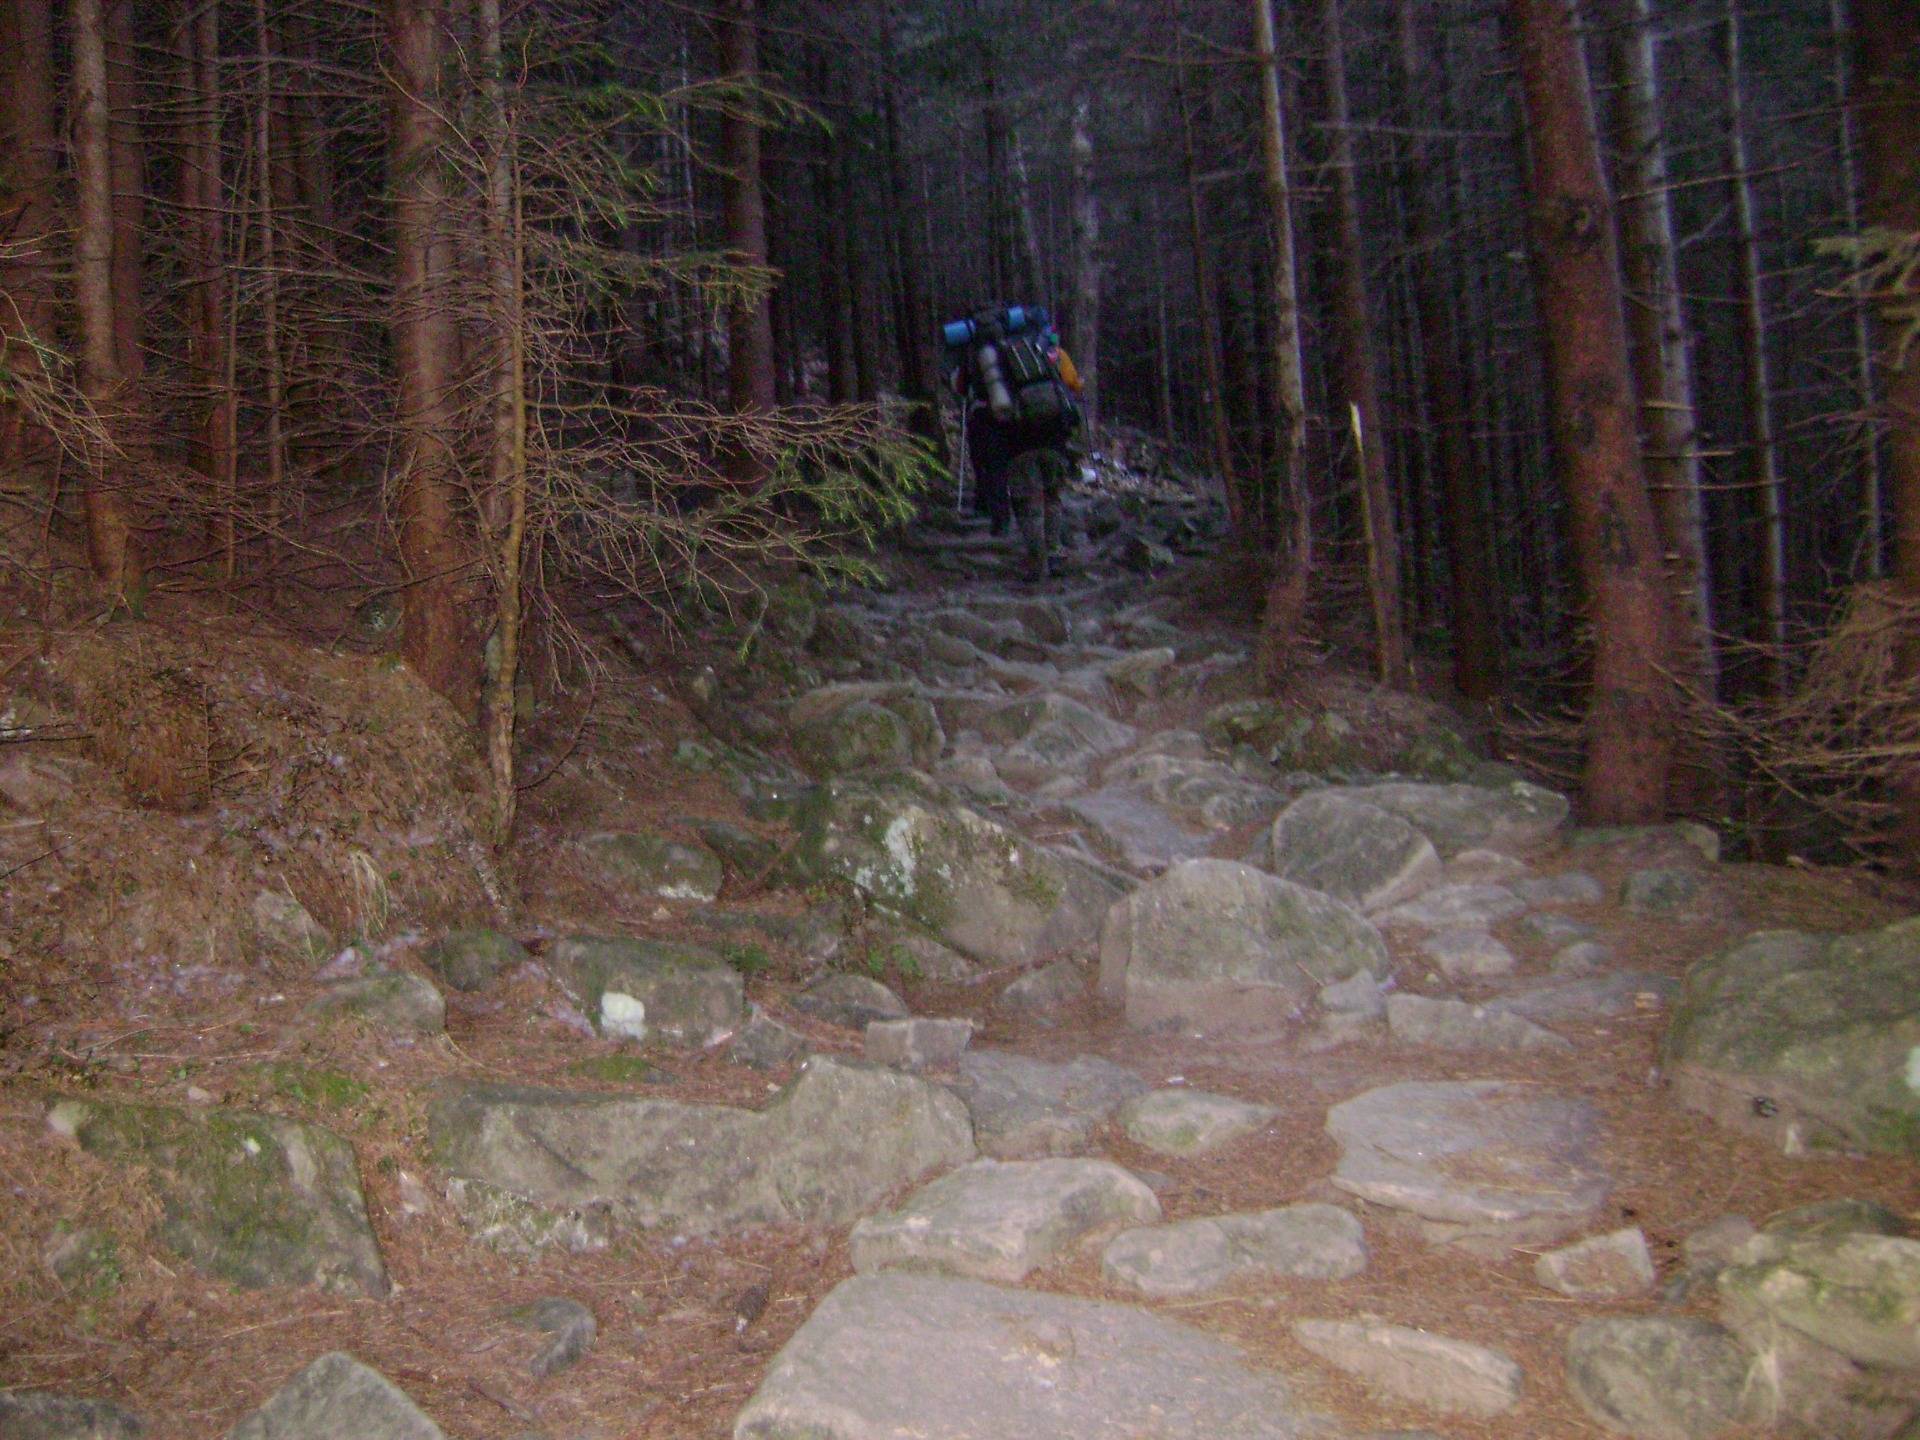 Rocky trail through spruce forest